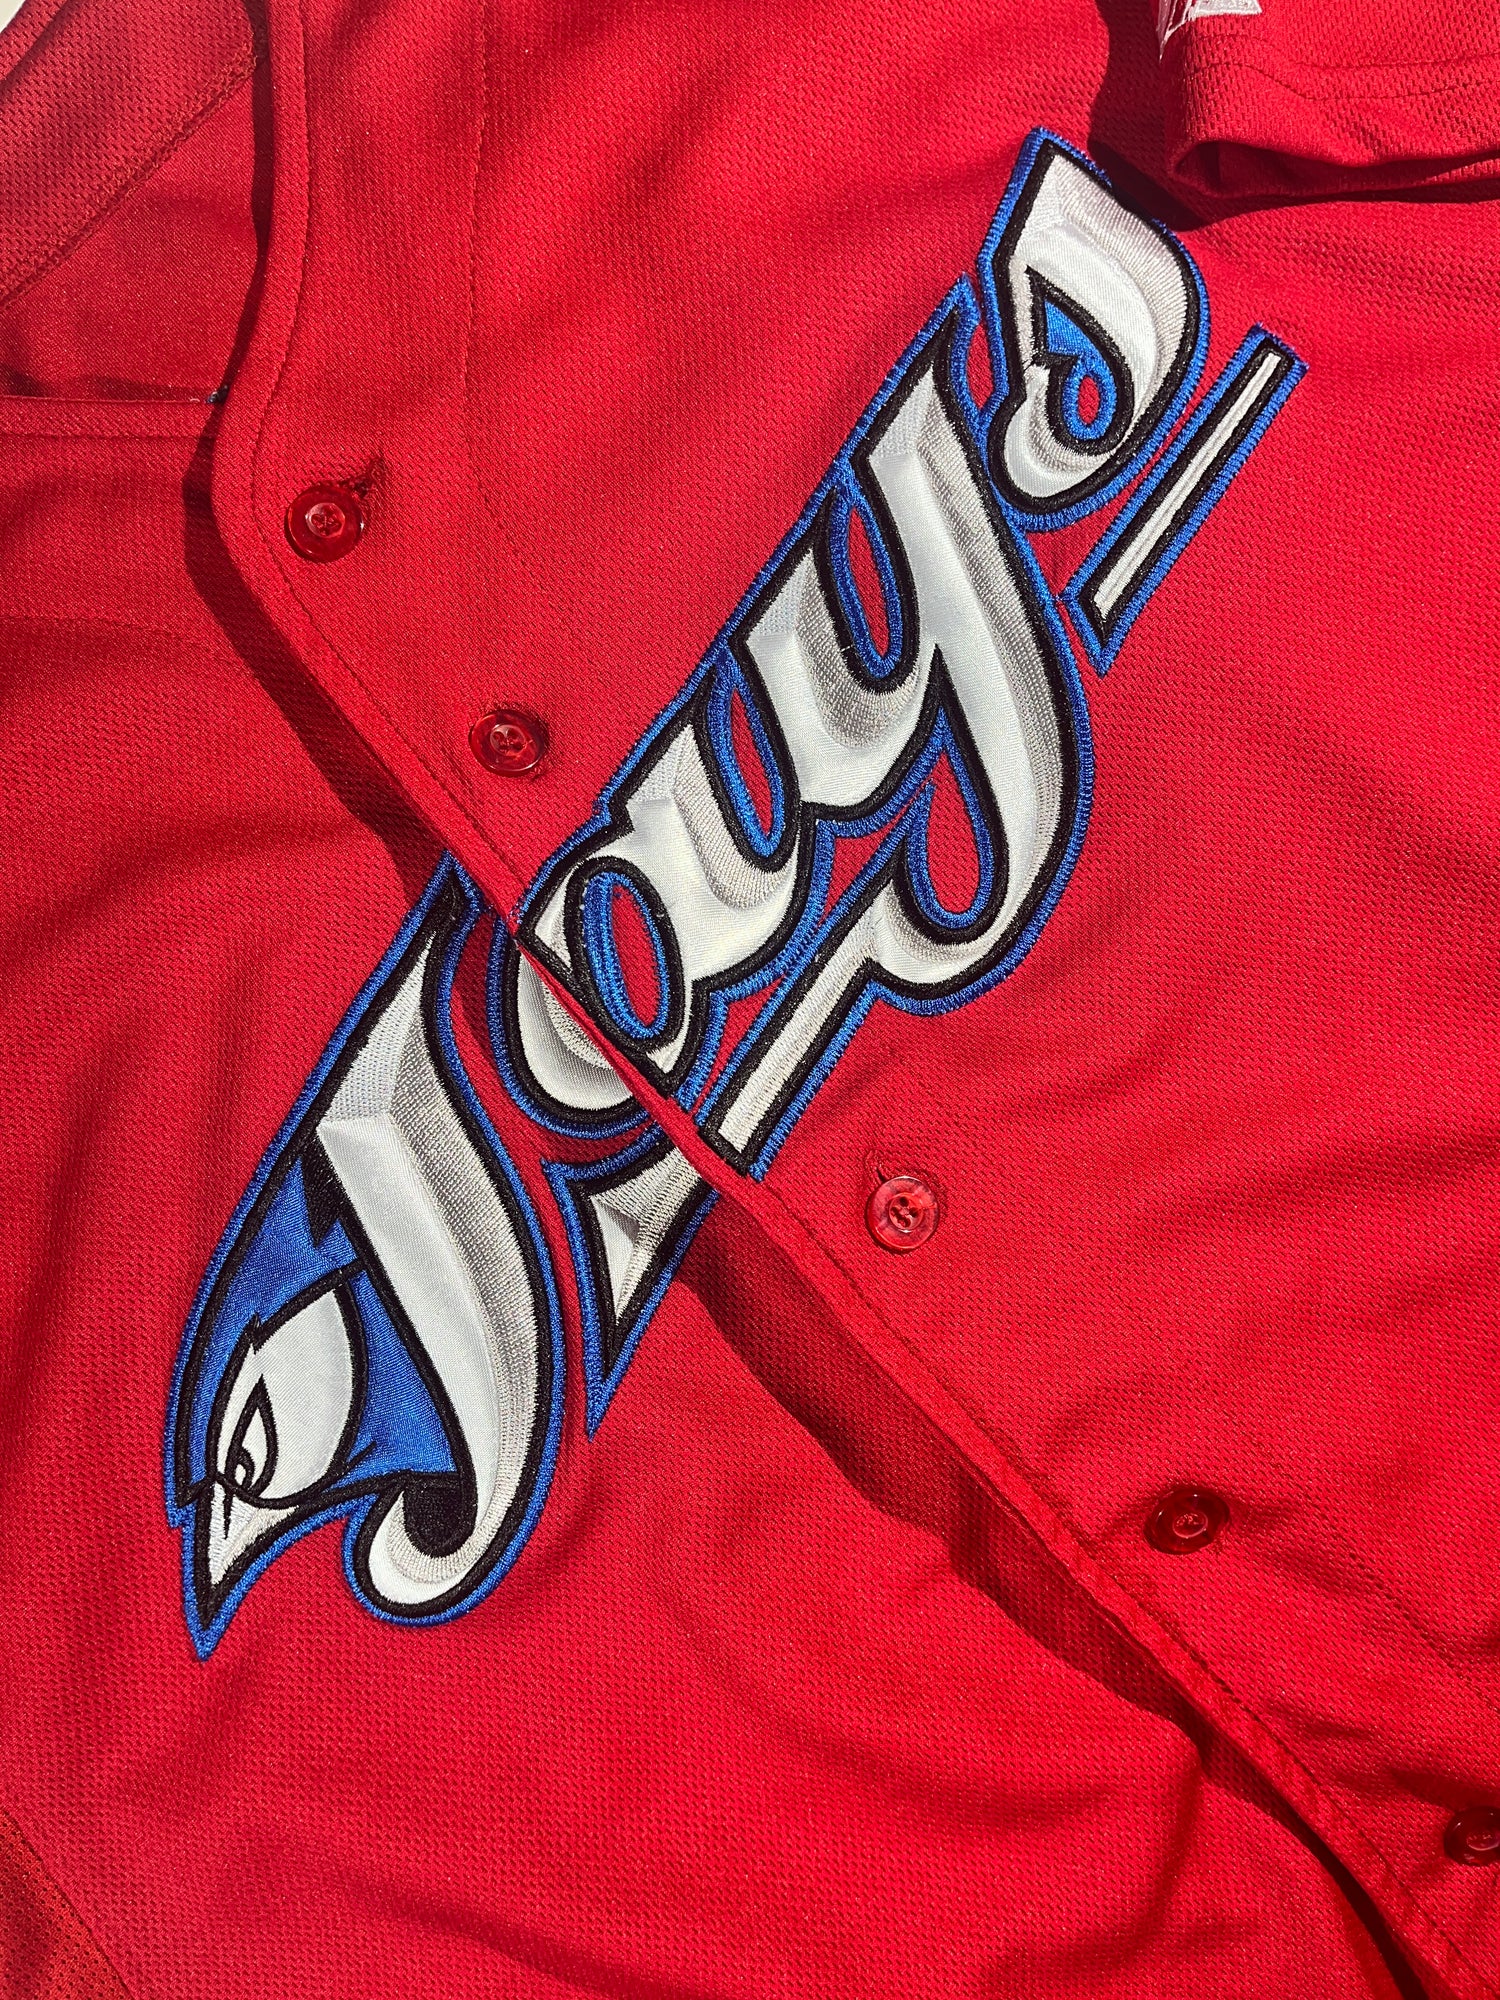 Vintage Blue Jays Jersey Top MLB Romero – Glorydays Fine Goods